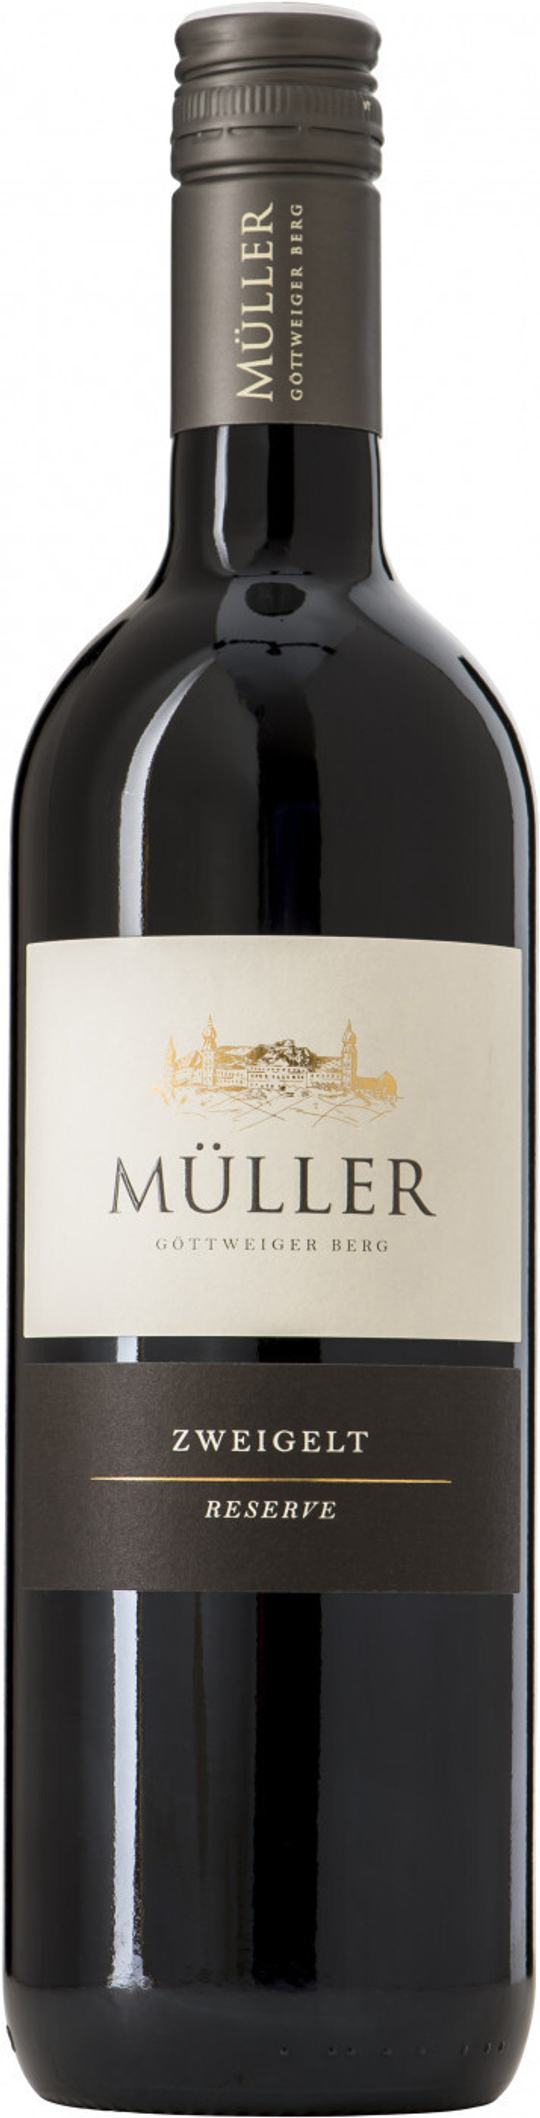 Вино Muller Zweigelt Reserve, 0,75 л.